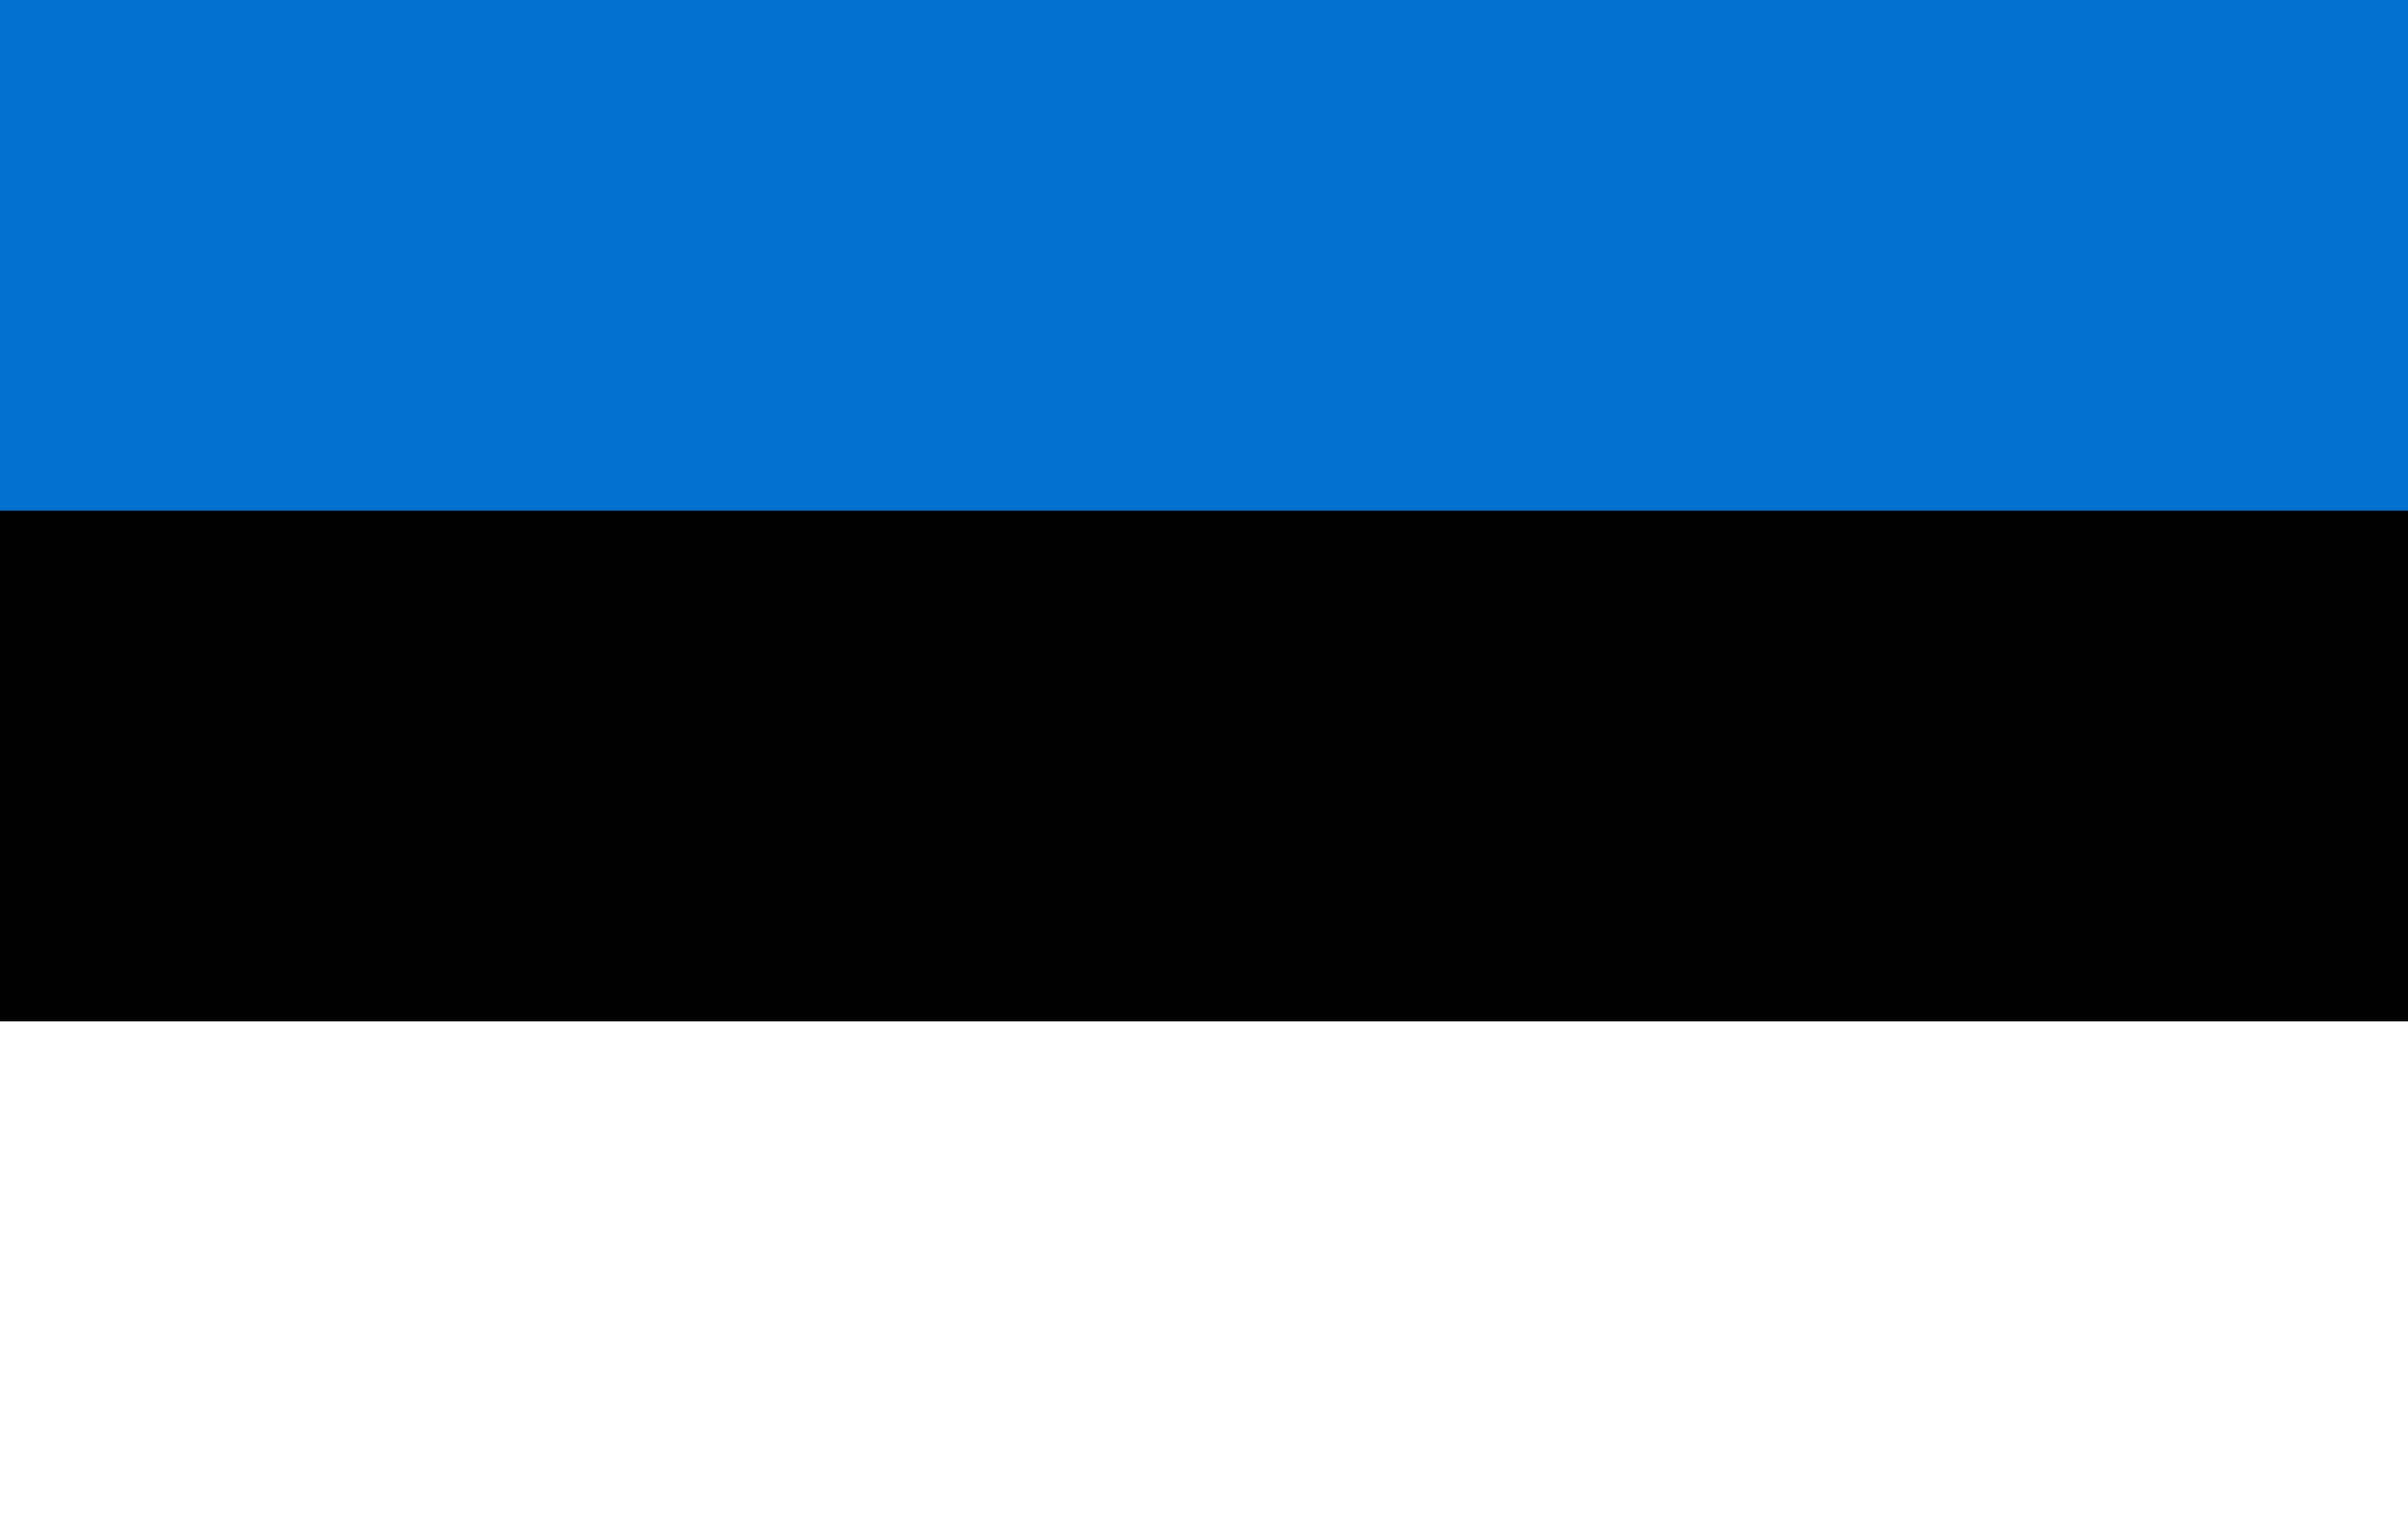 File:Estonian flag.png.png